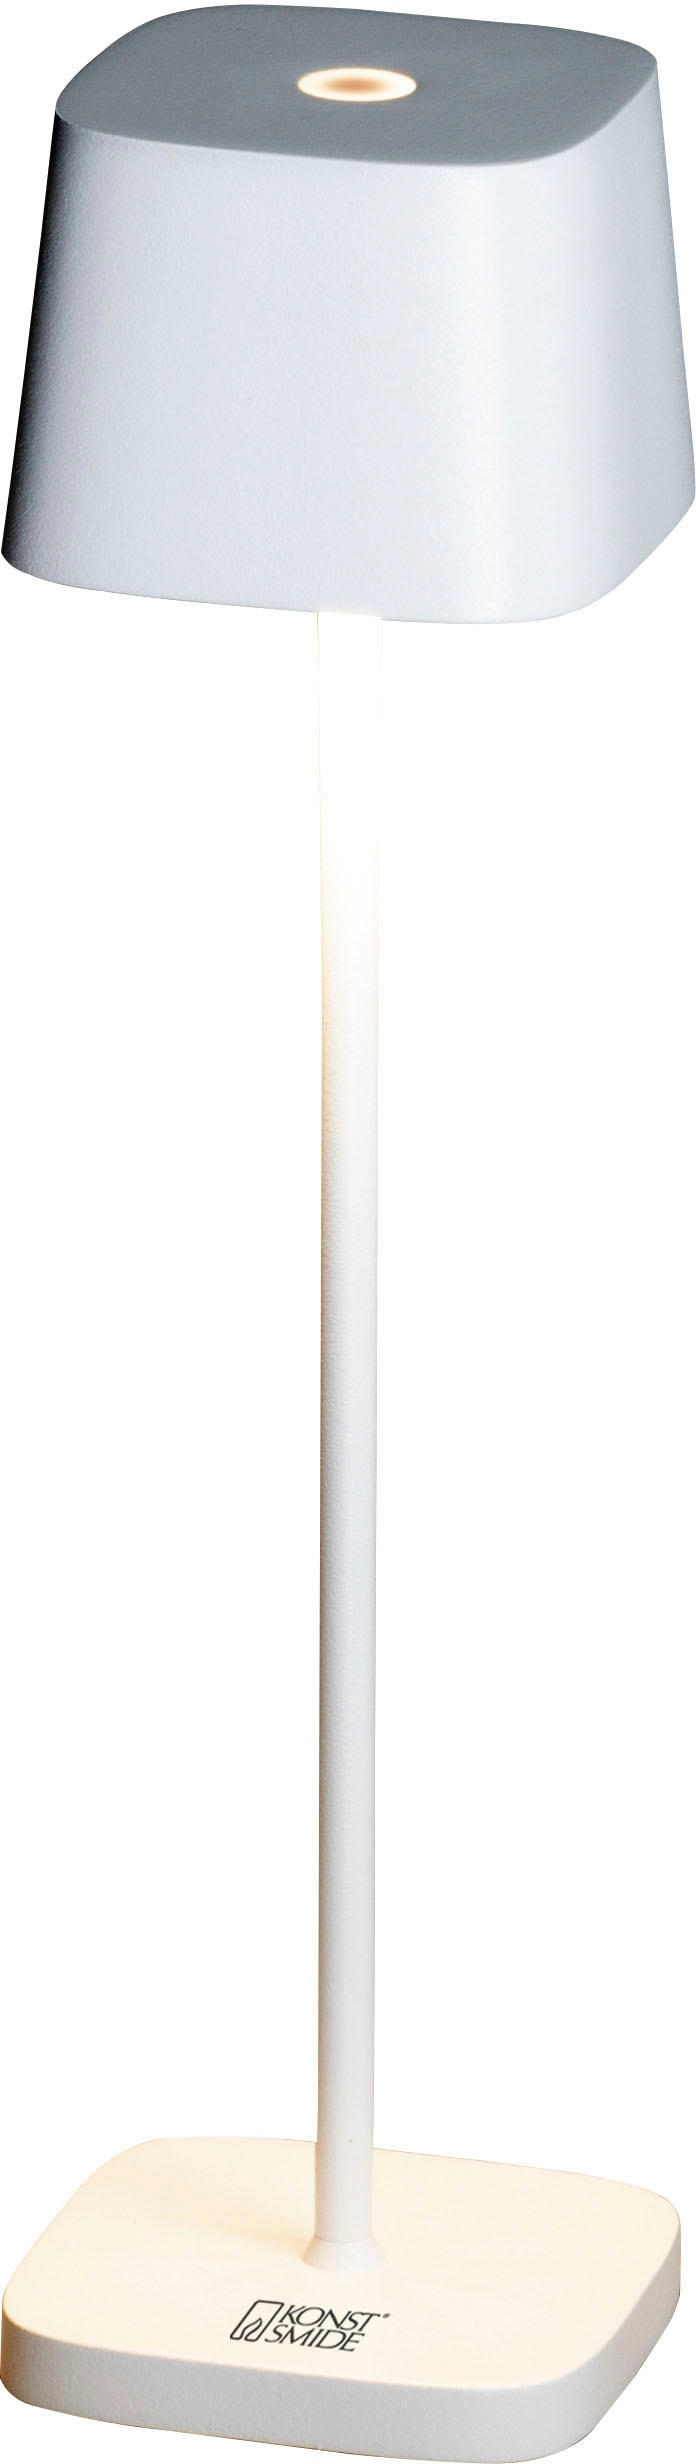 KONSTSMIDE LED Tischleuchte »Capri-Mini«, Capri-Mini USB-Tischl. weiß, 2700/3000K, dimmbar, eckig